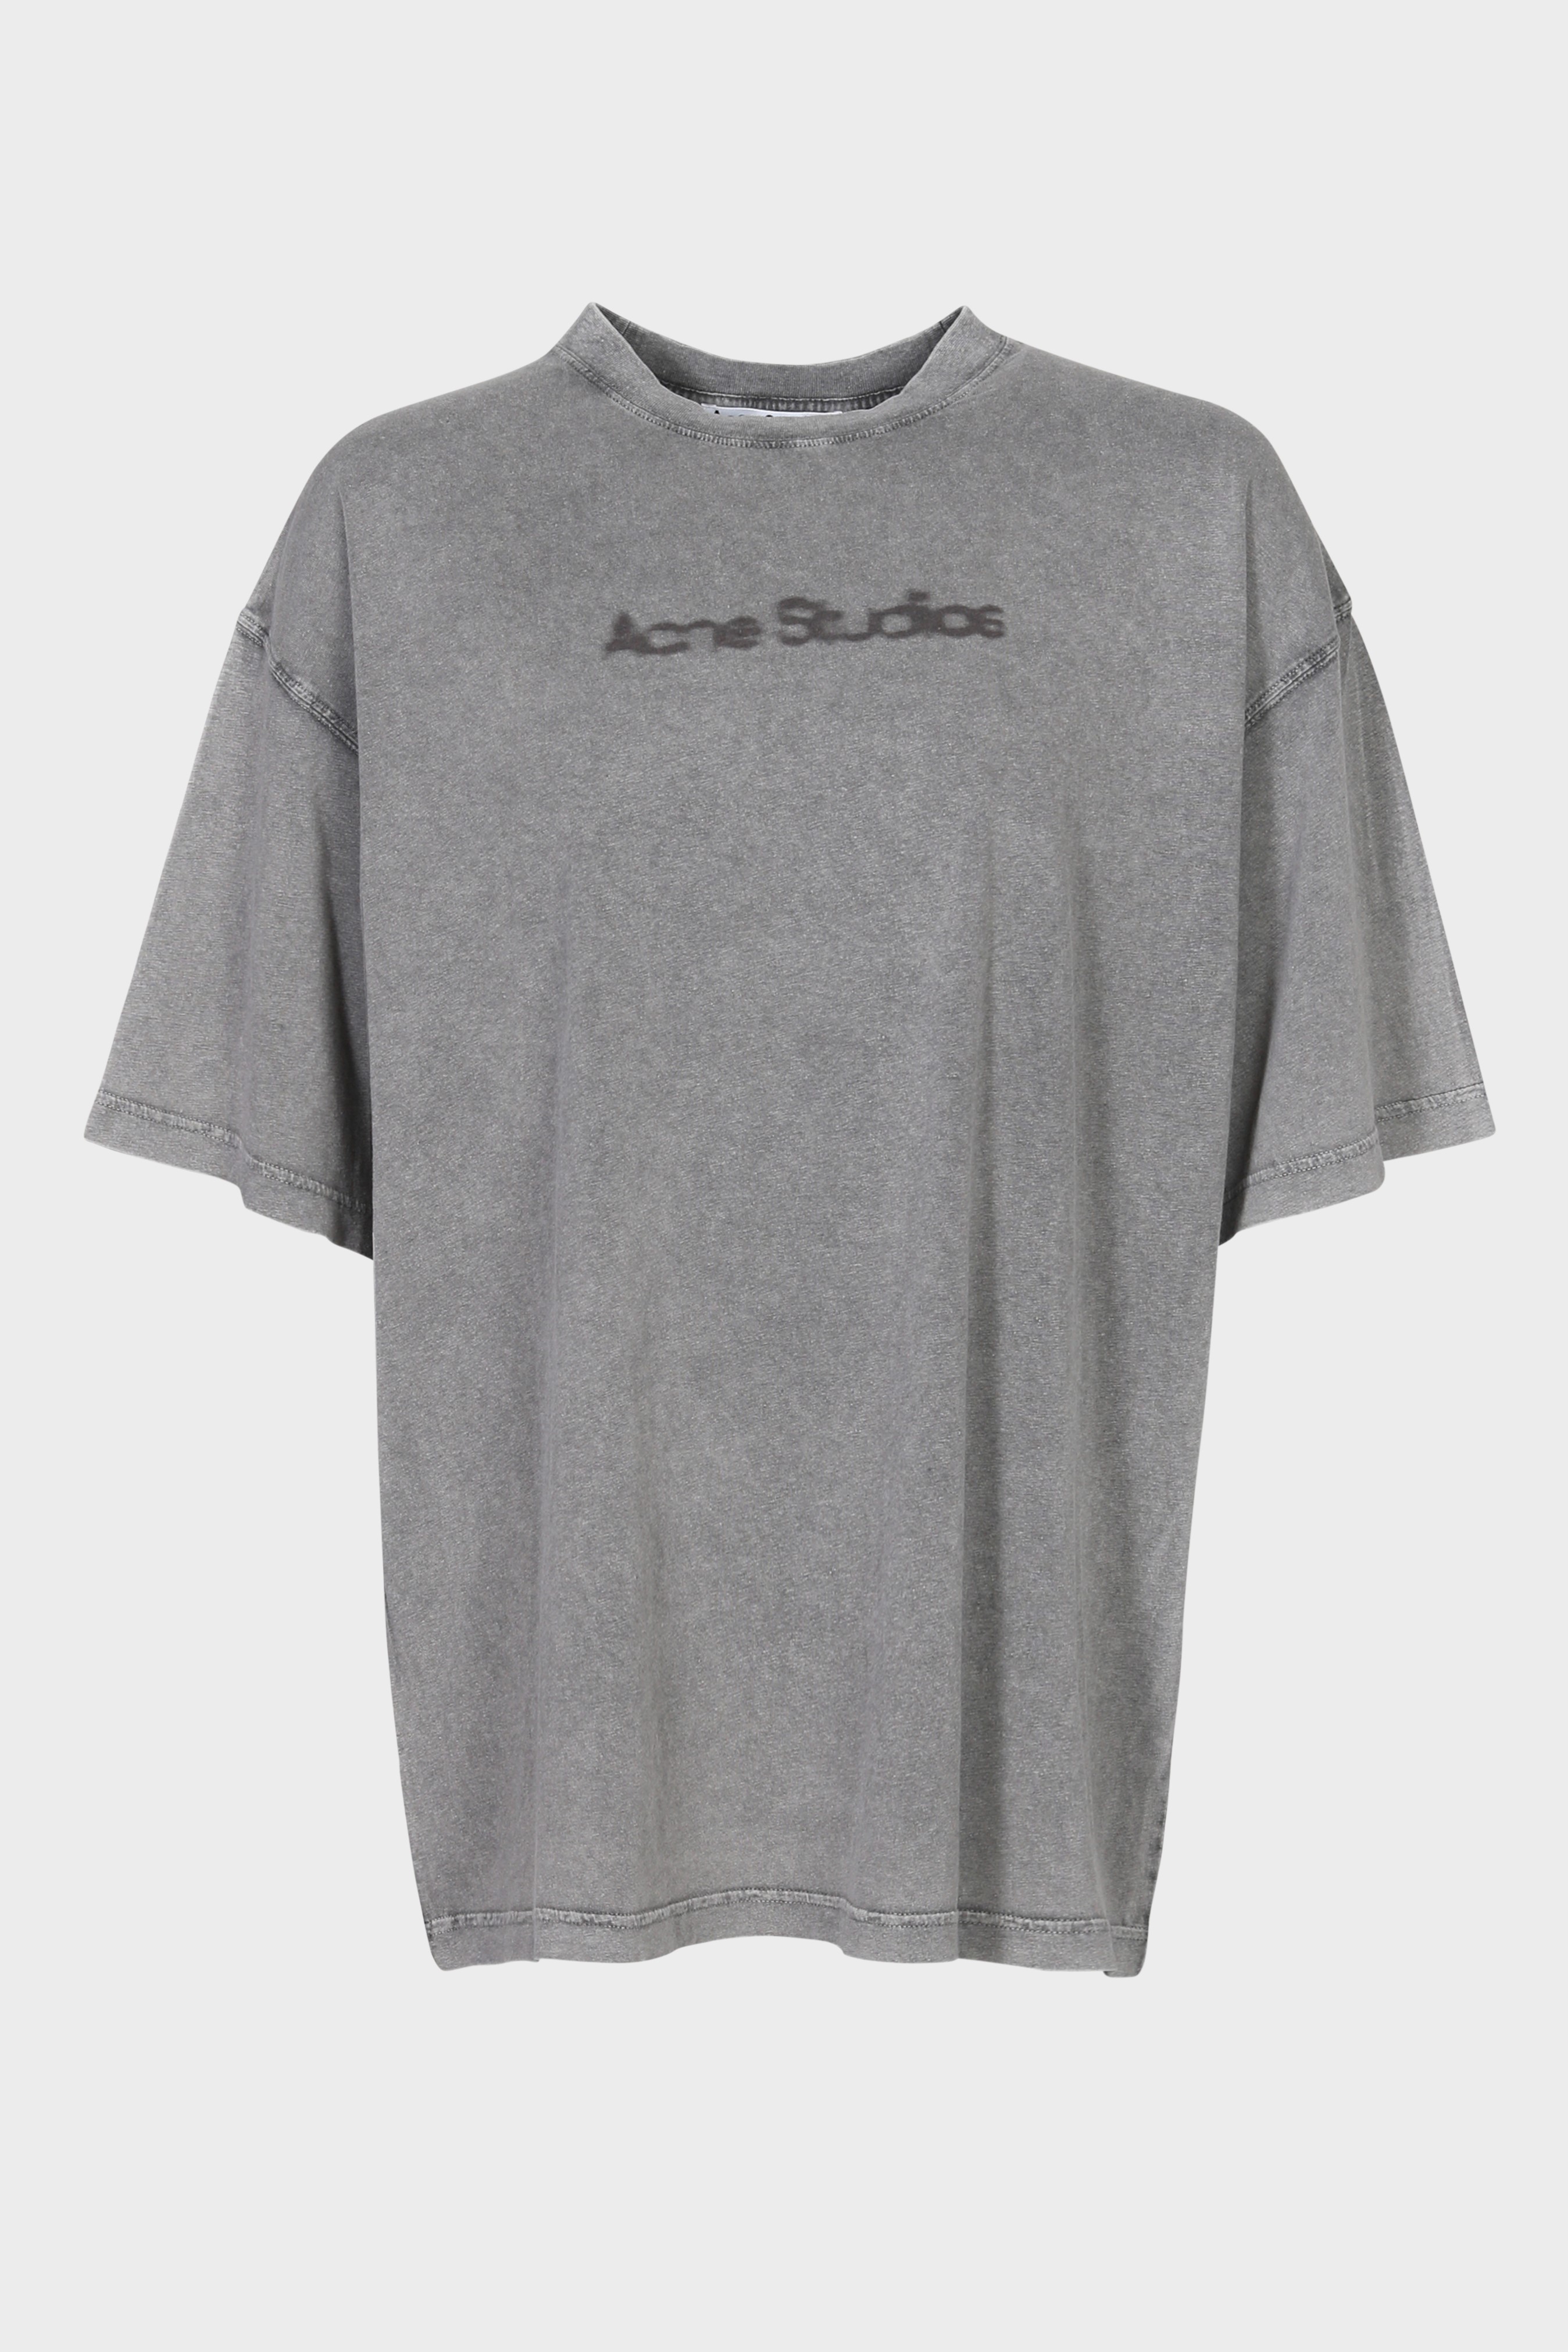 ACNE STUDIOS Logo T-Shirt in Faded Grey